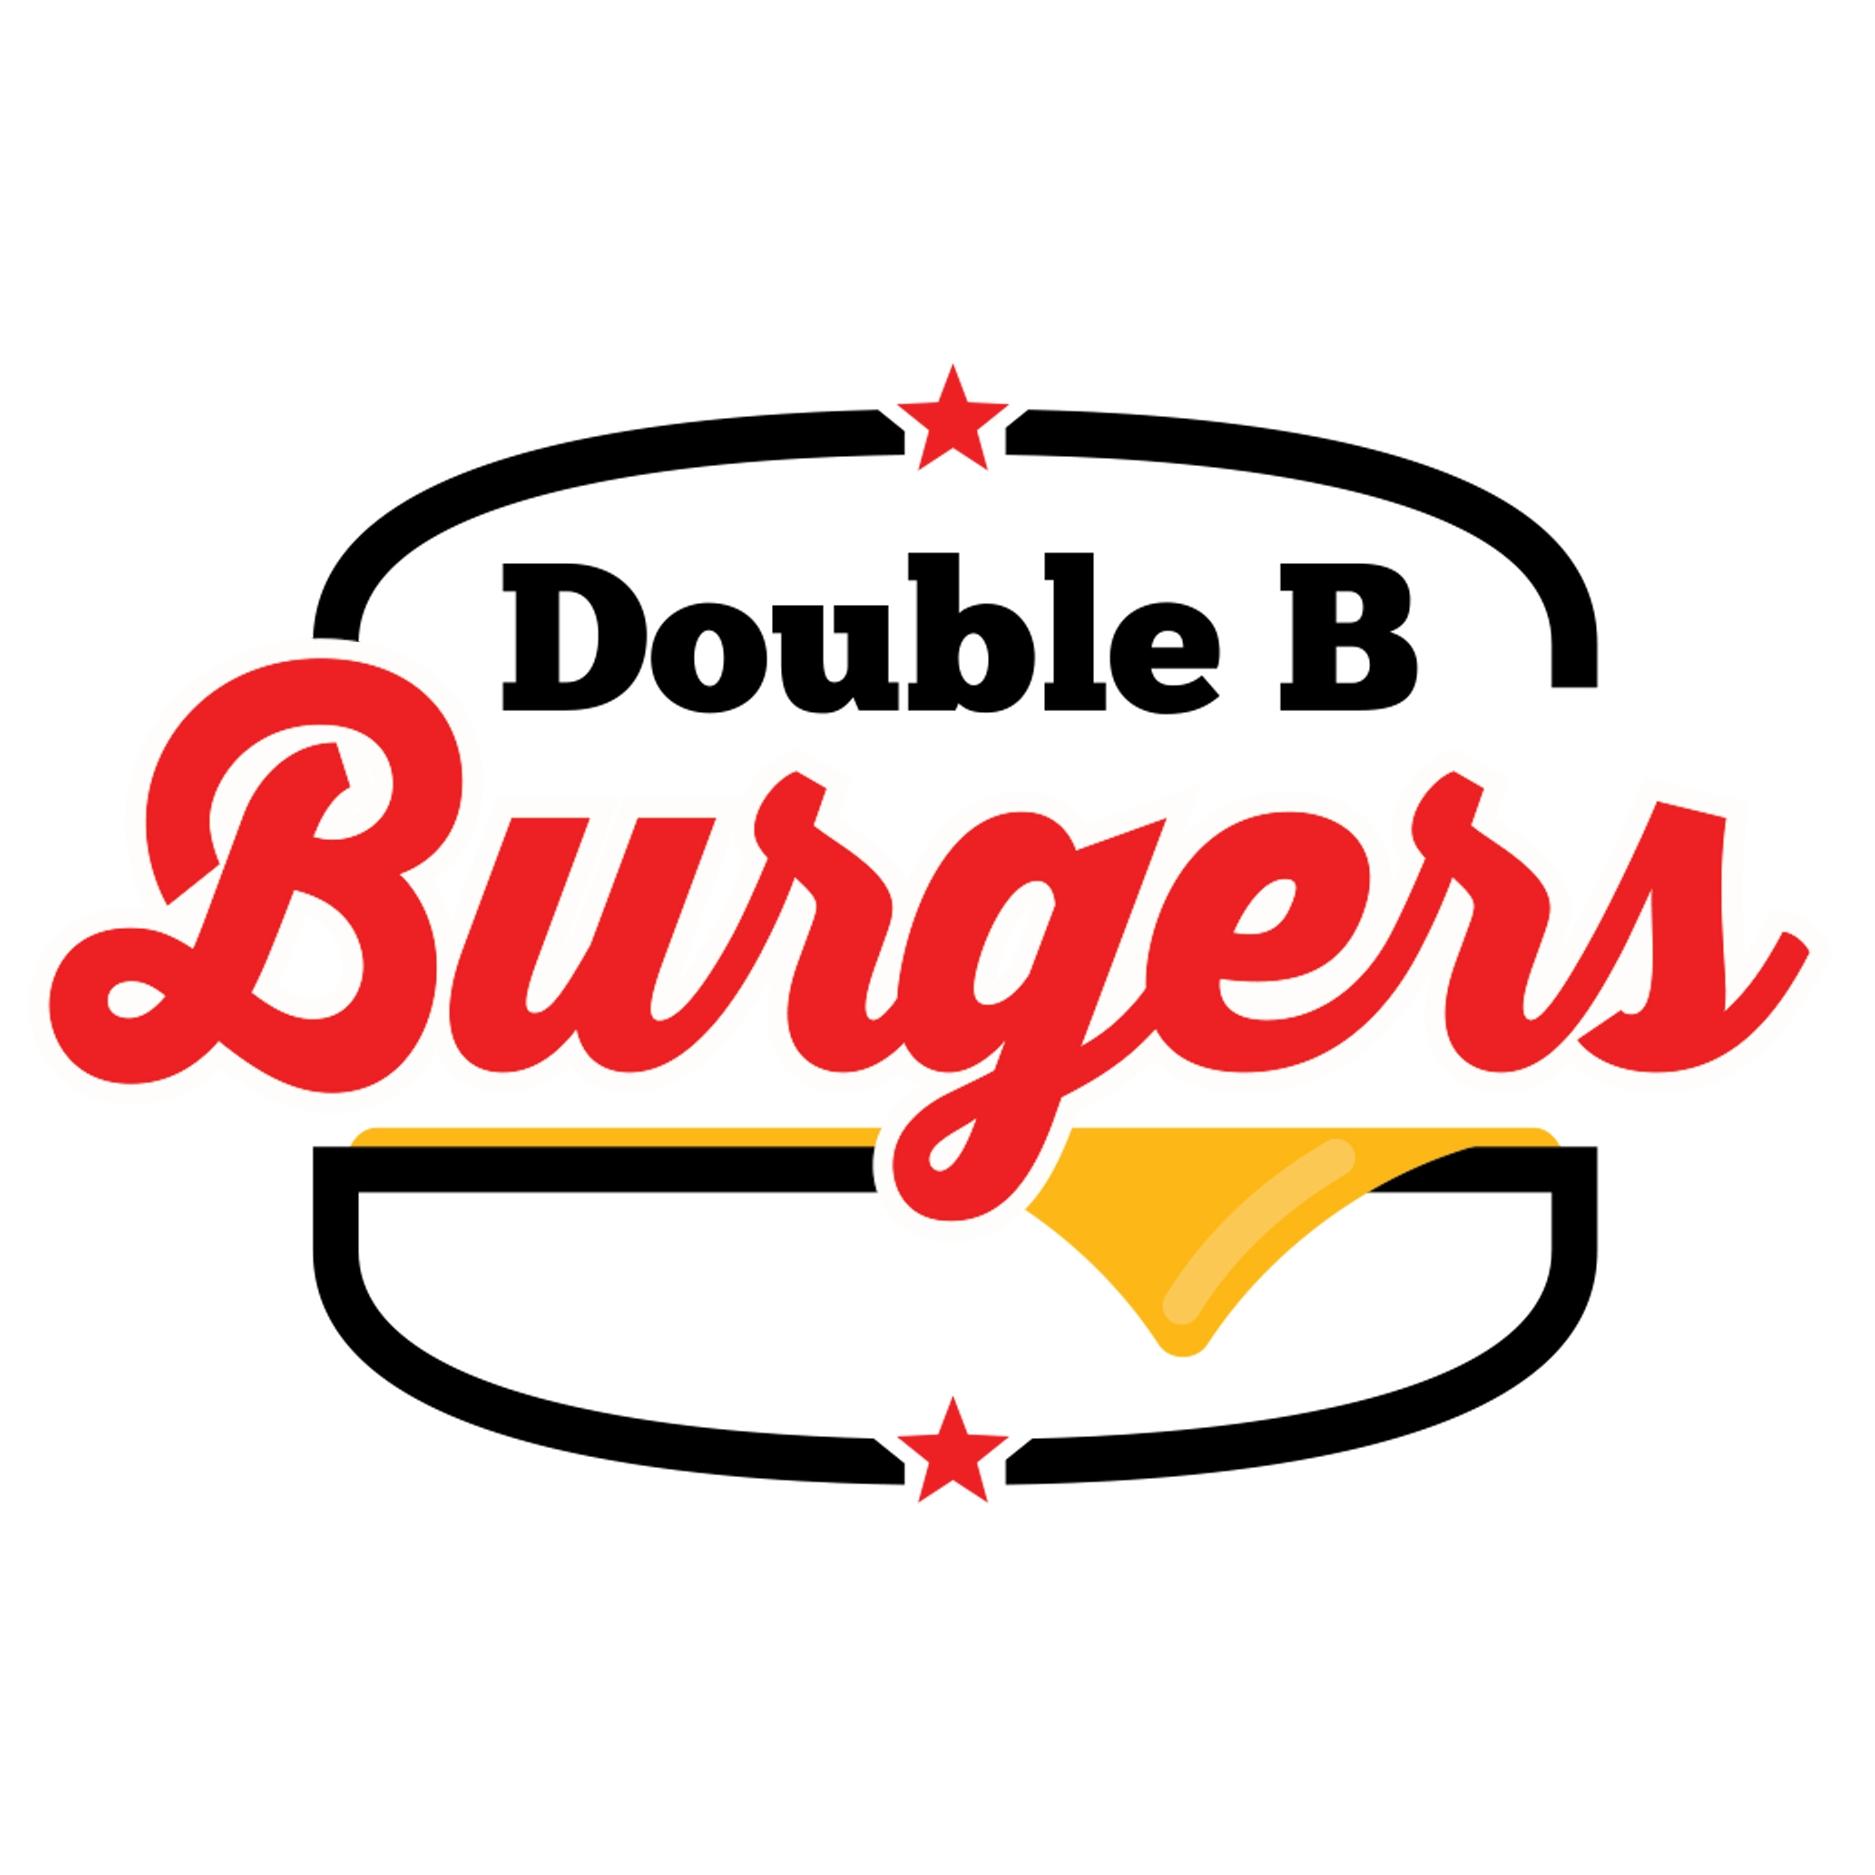 Double B Burgers